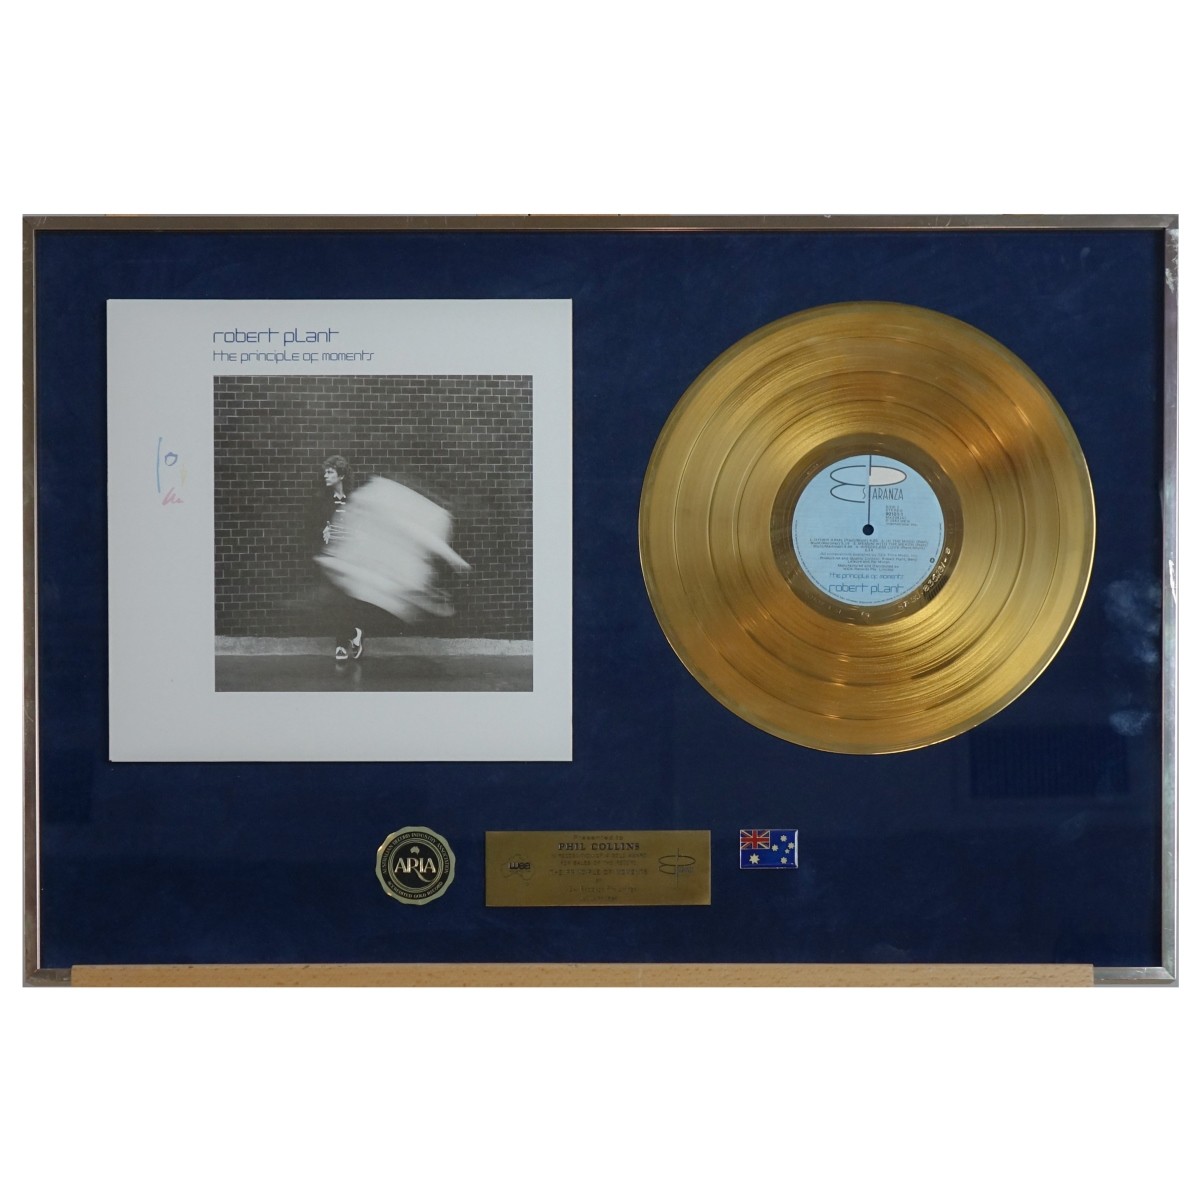 Phil Collins-Robert Plant Certified Gold LP Award